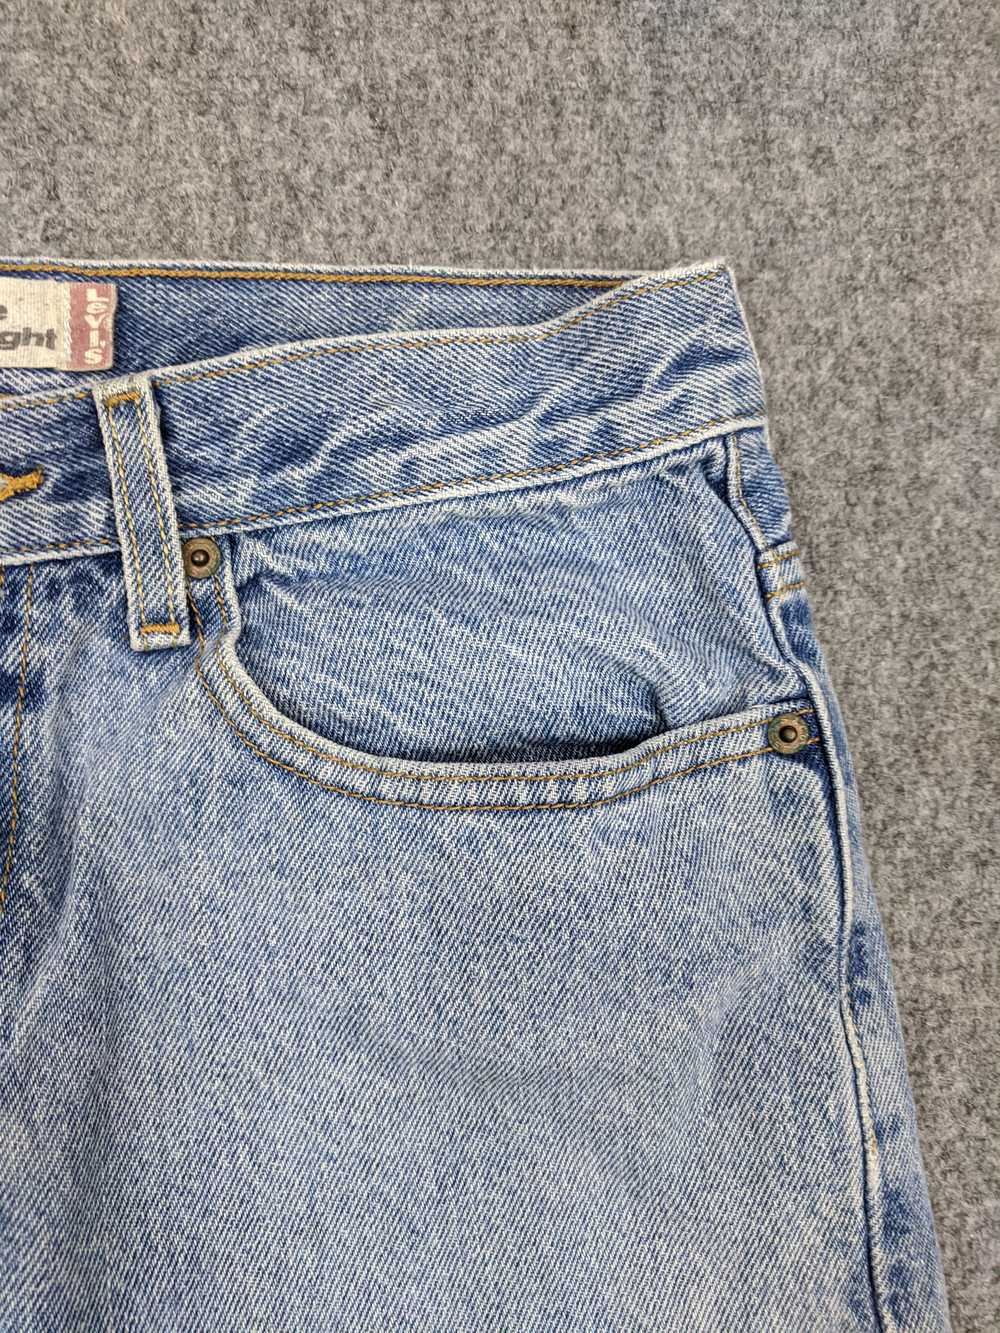 Vintage - Vintage Levis 569 Jeans - image 5